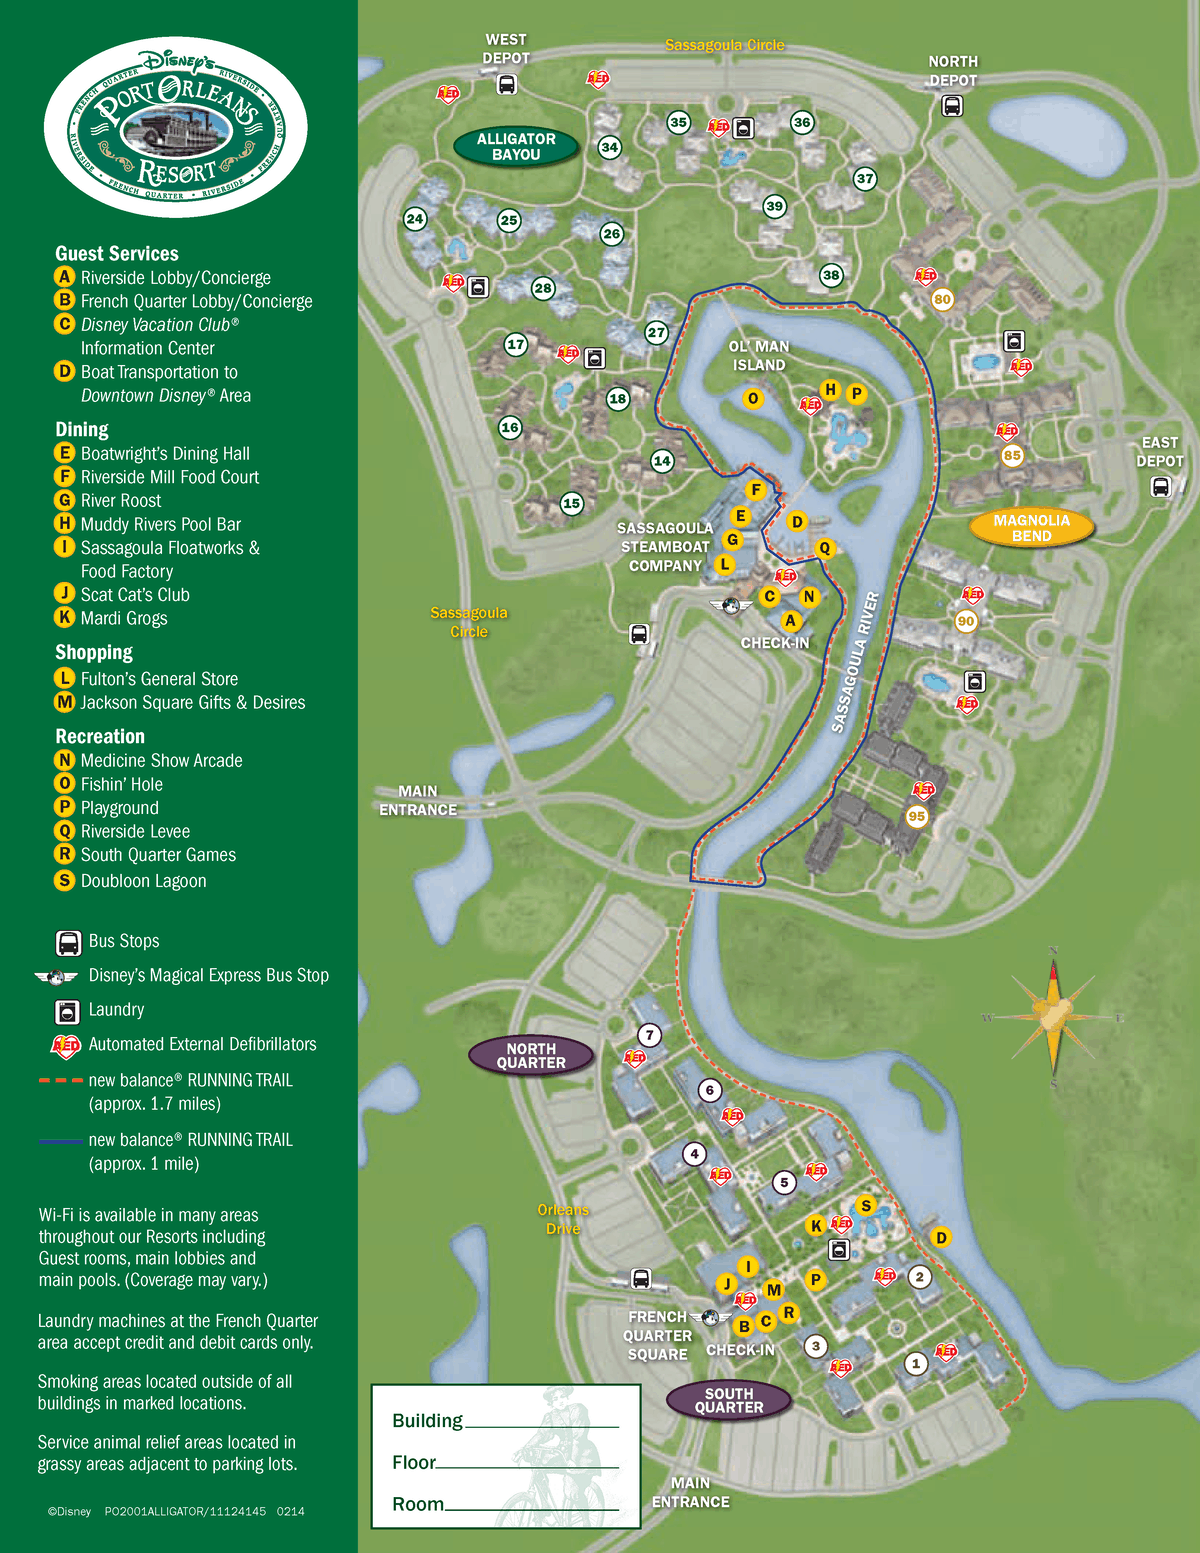 Map of Port Orleans Resort Disney World